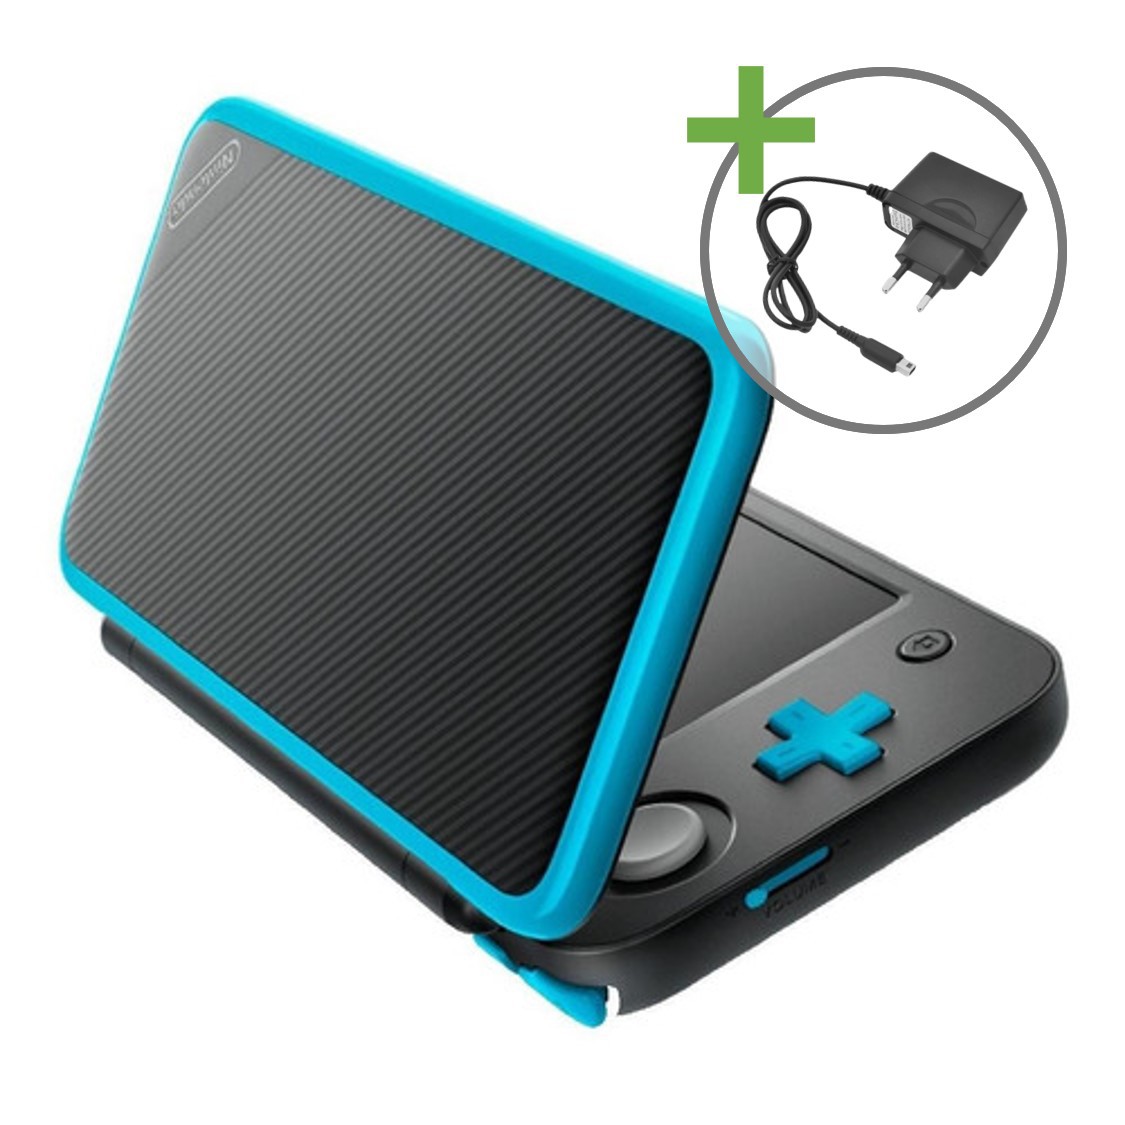 New Nintendo 2DS XL - Black/Turquoise - Nintendo 3DS Hardware - 2